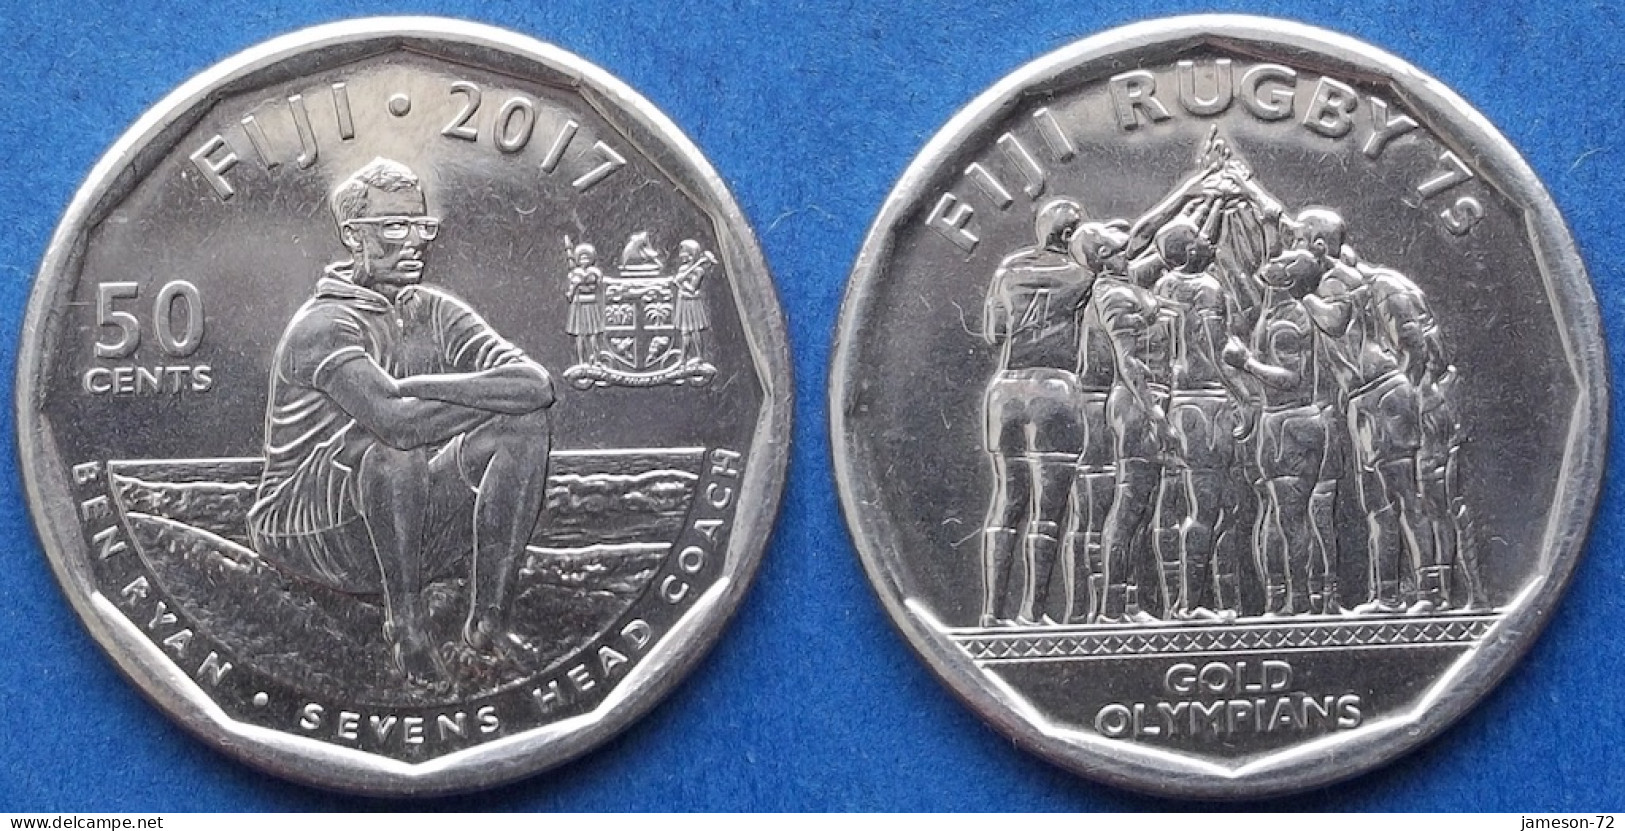 FIJI - 50 Cents 2017 "Fiji Rugby 7s - Gold Olympians" KM# 528 Elizabeth II Decimal Coinage (1971-2022) - Edelweiss Coins - Fidji